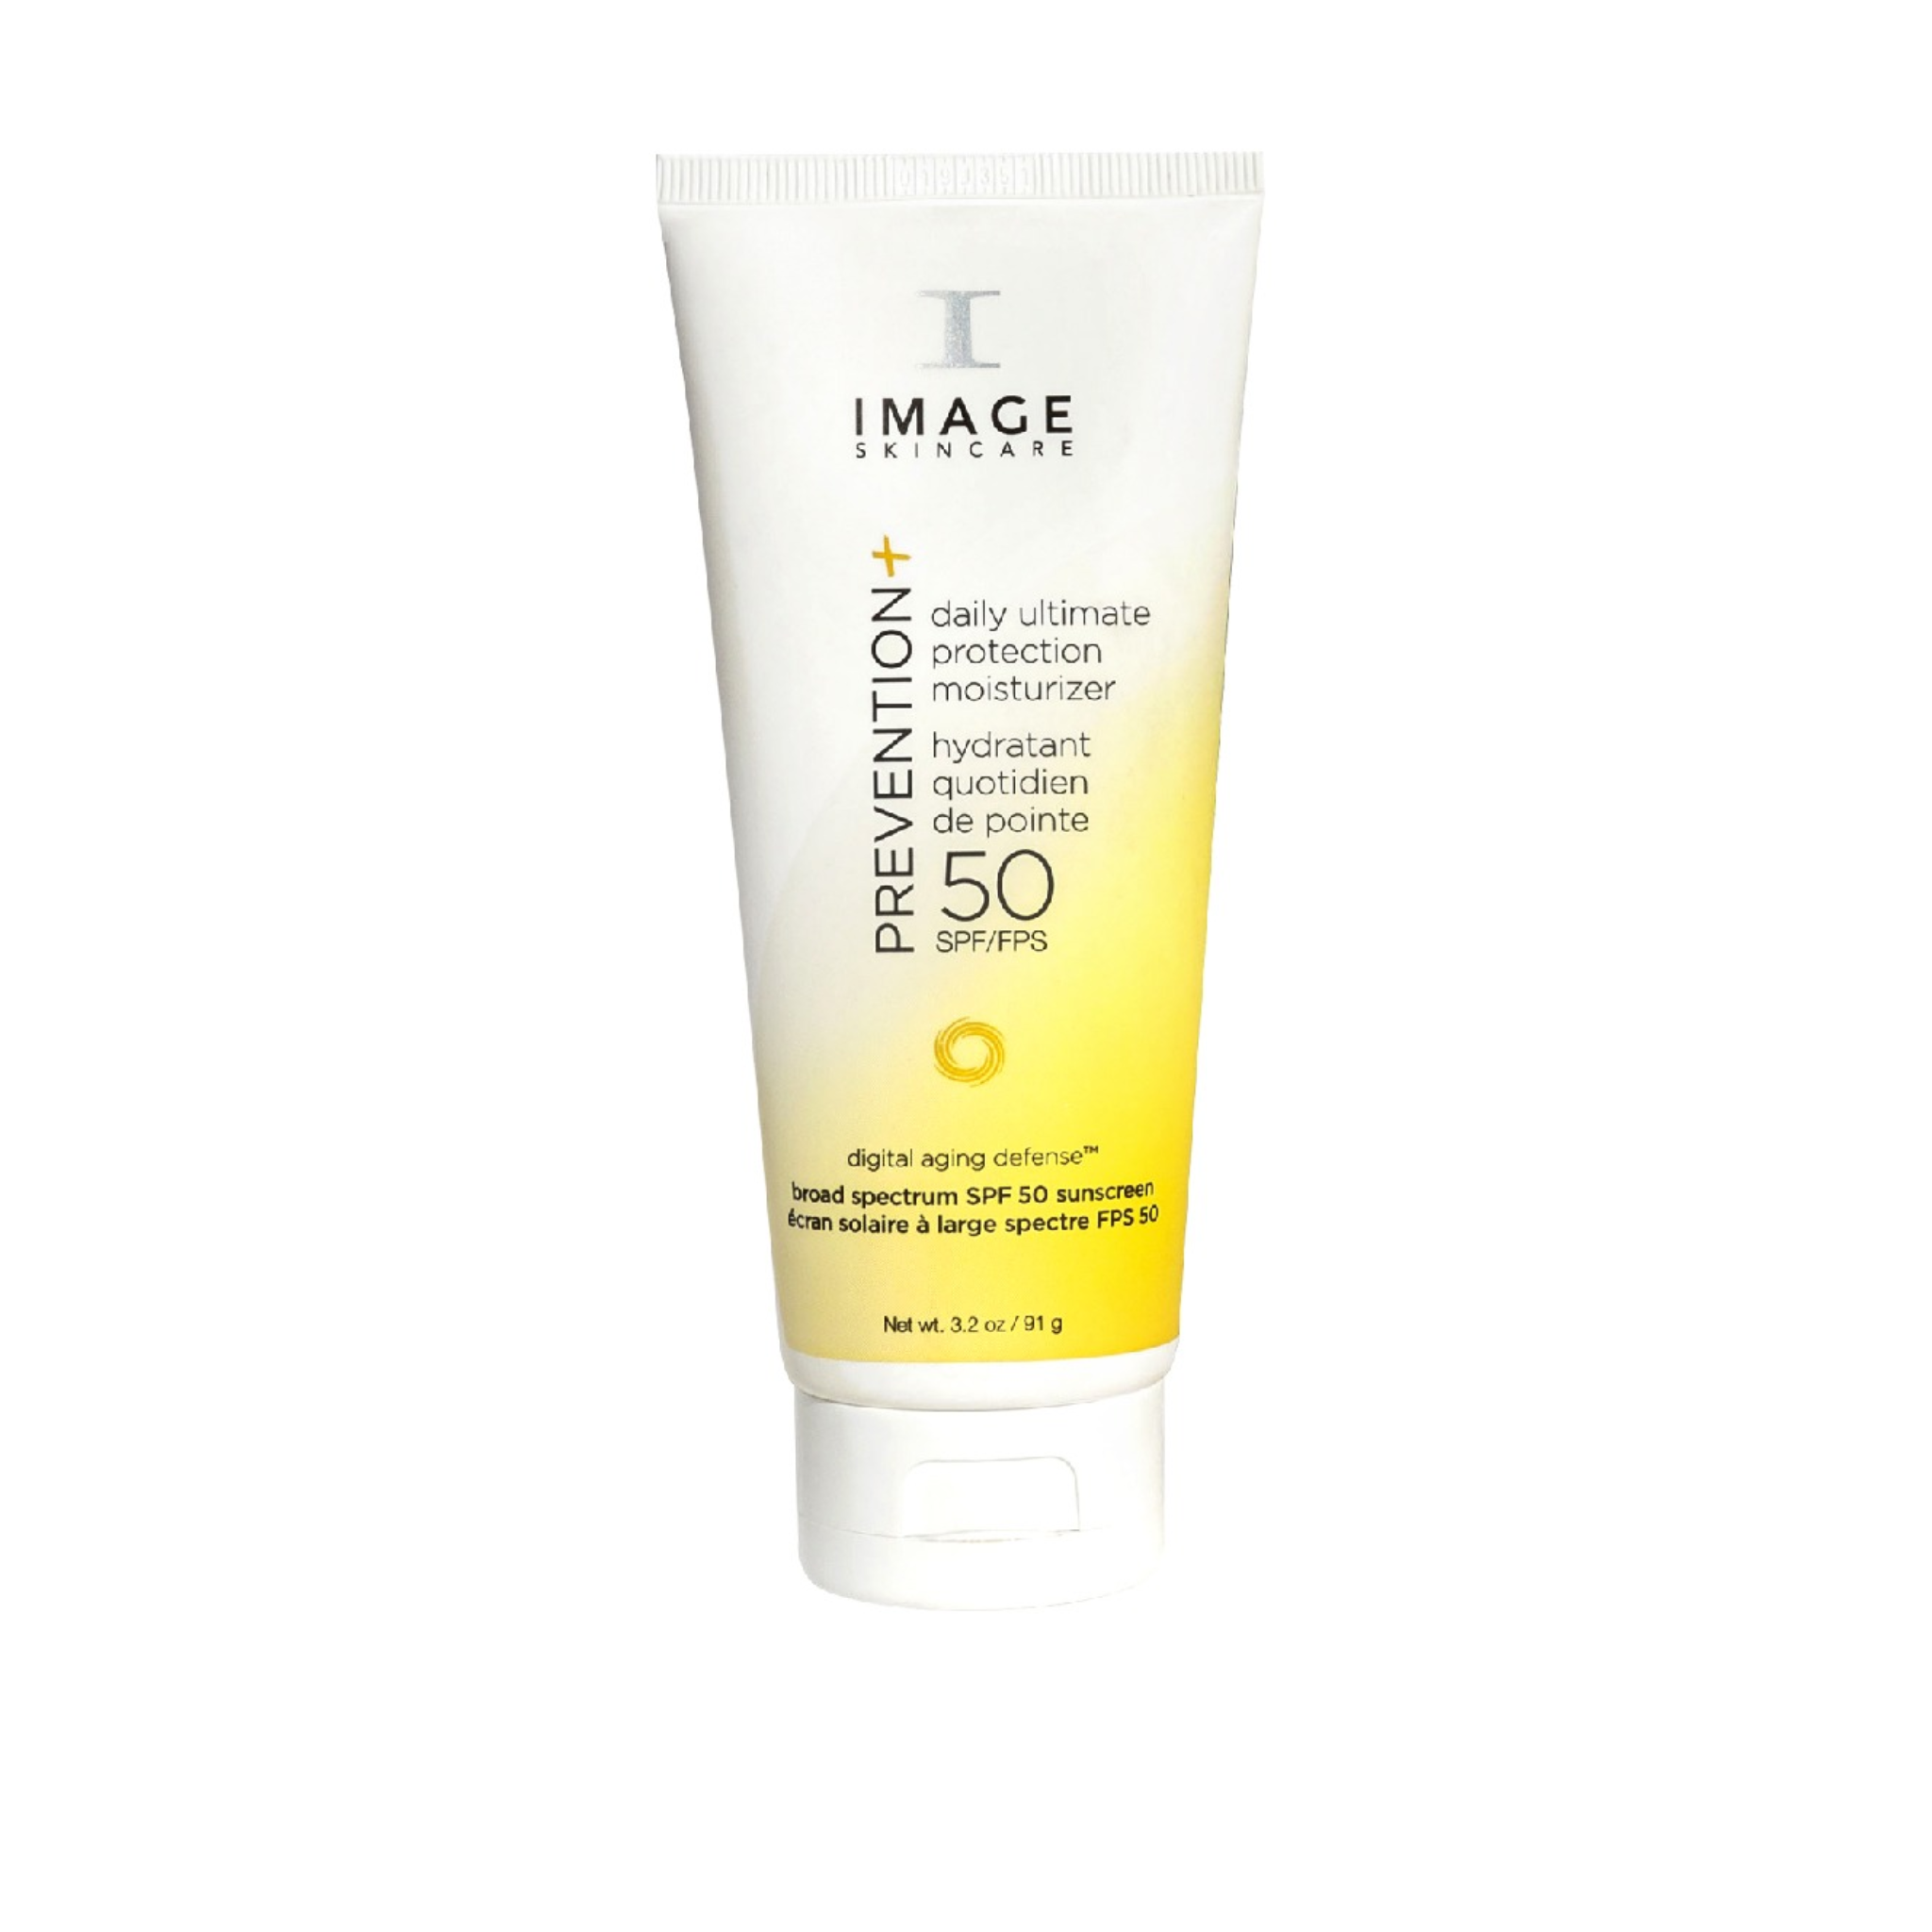  Kem chống nắng da hỗn hợp Image Skincare Prevention+ Daily Ultimate Protection Moisturizer SPF50+ 